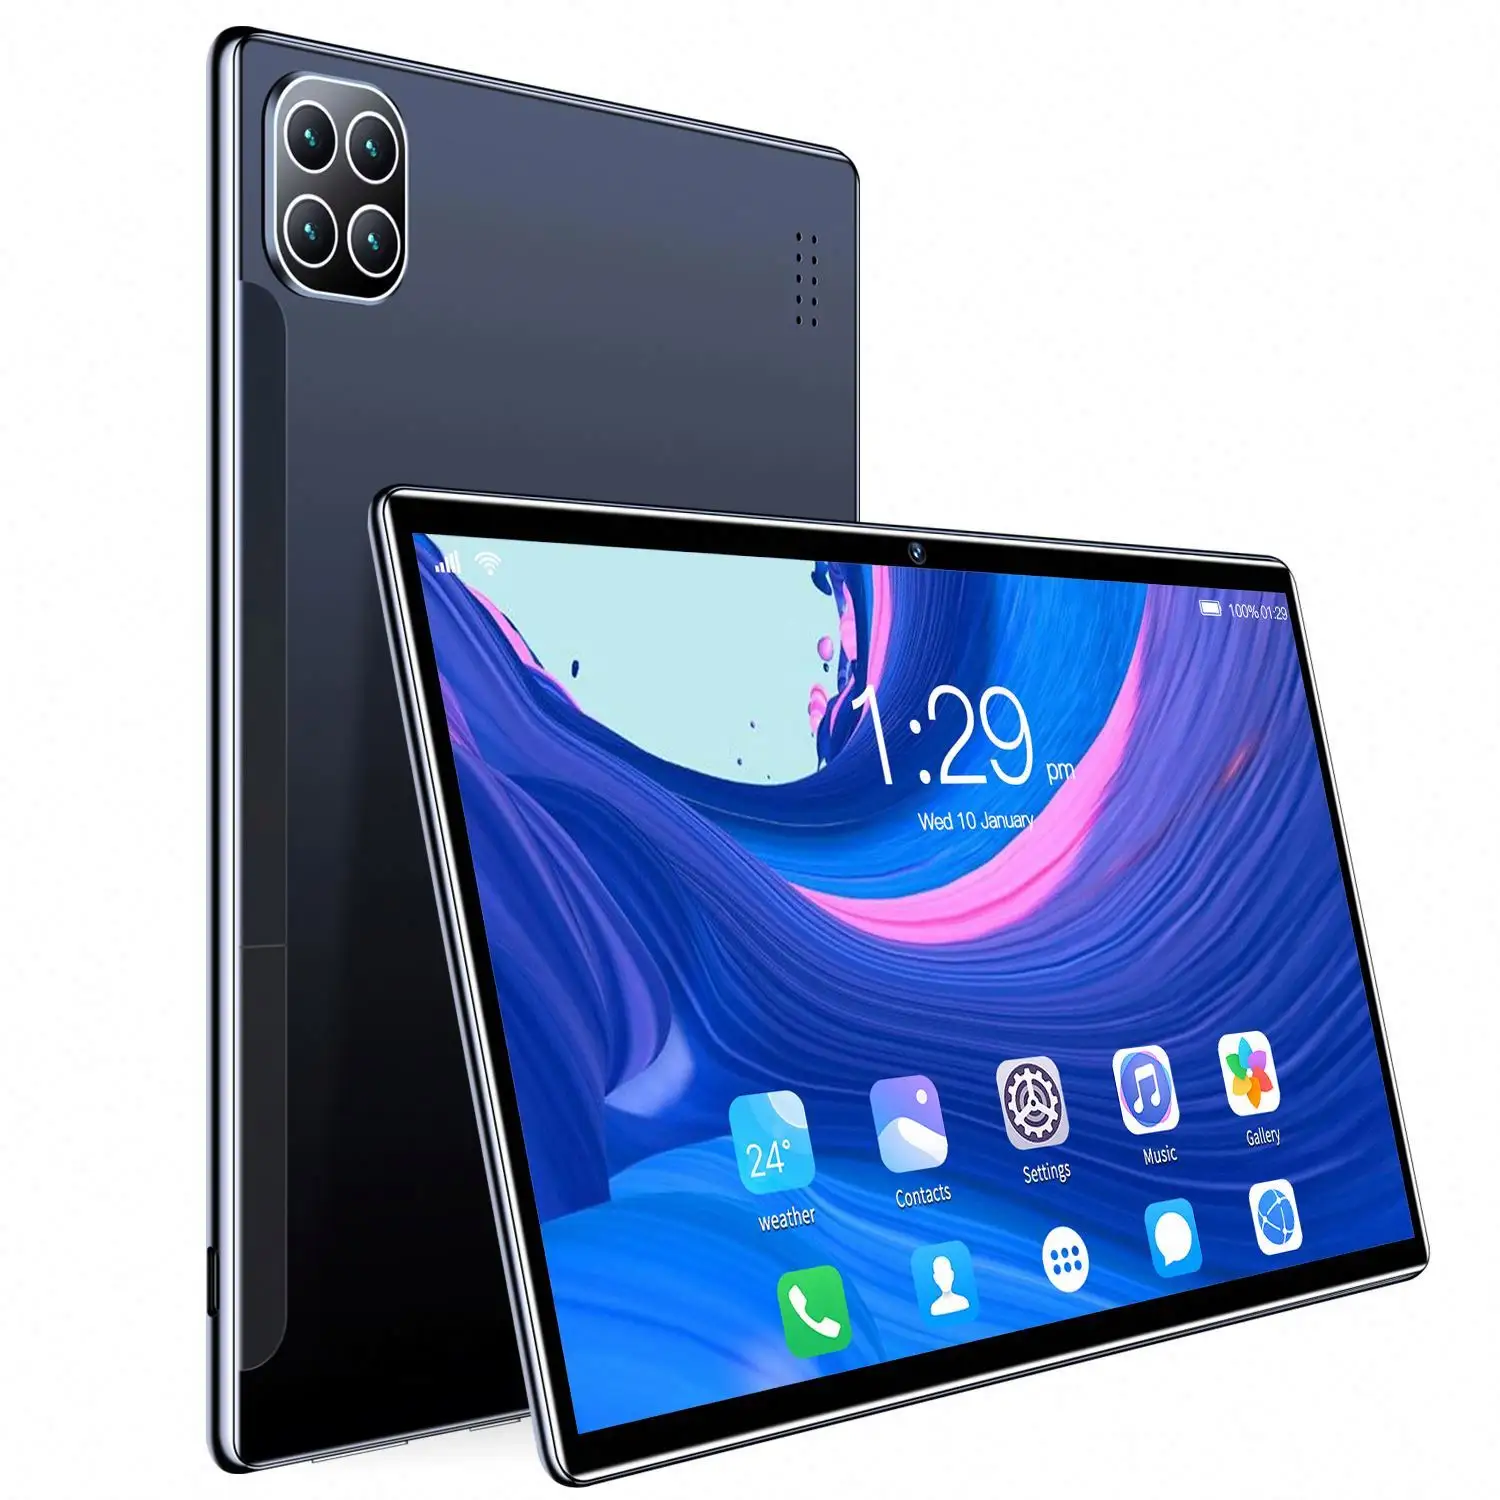 16GB 32GB bellek ile 2020 Android Tablet 10.1 inç mobil Wifi 3G telefon sekmesi